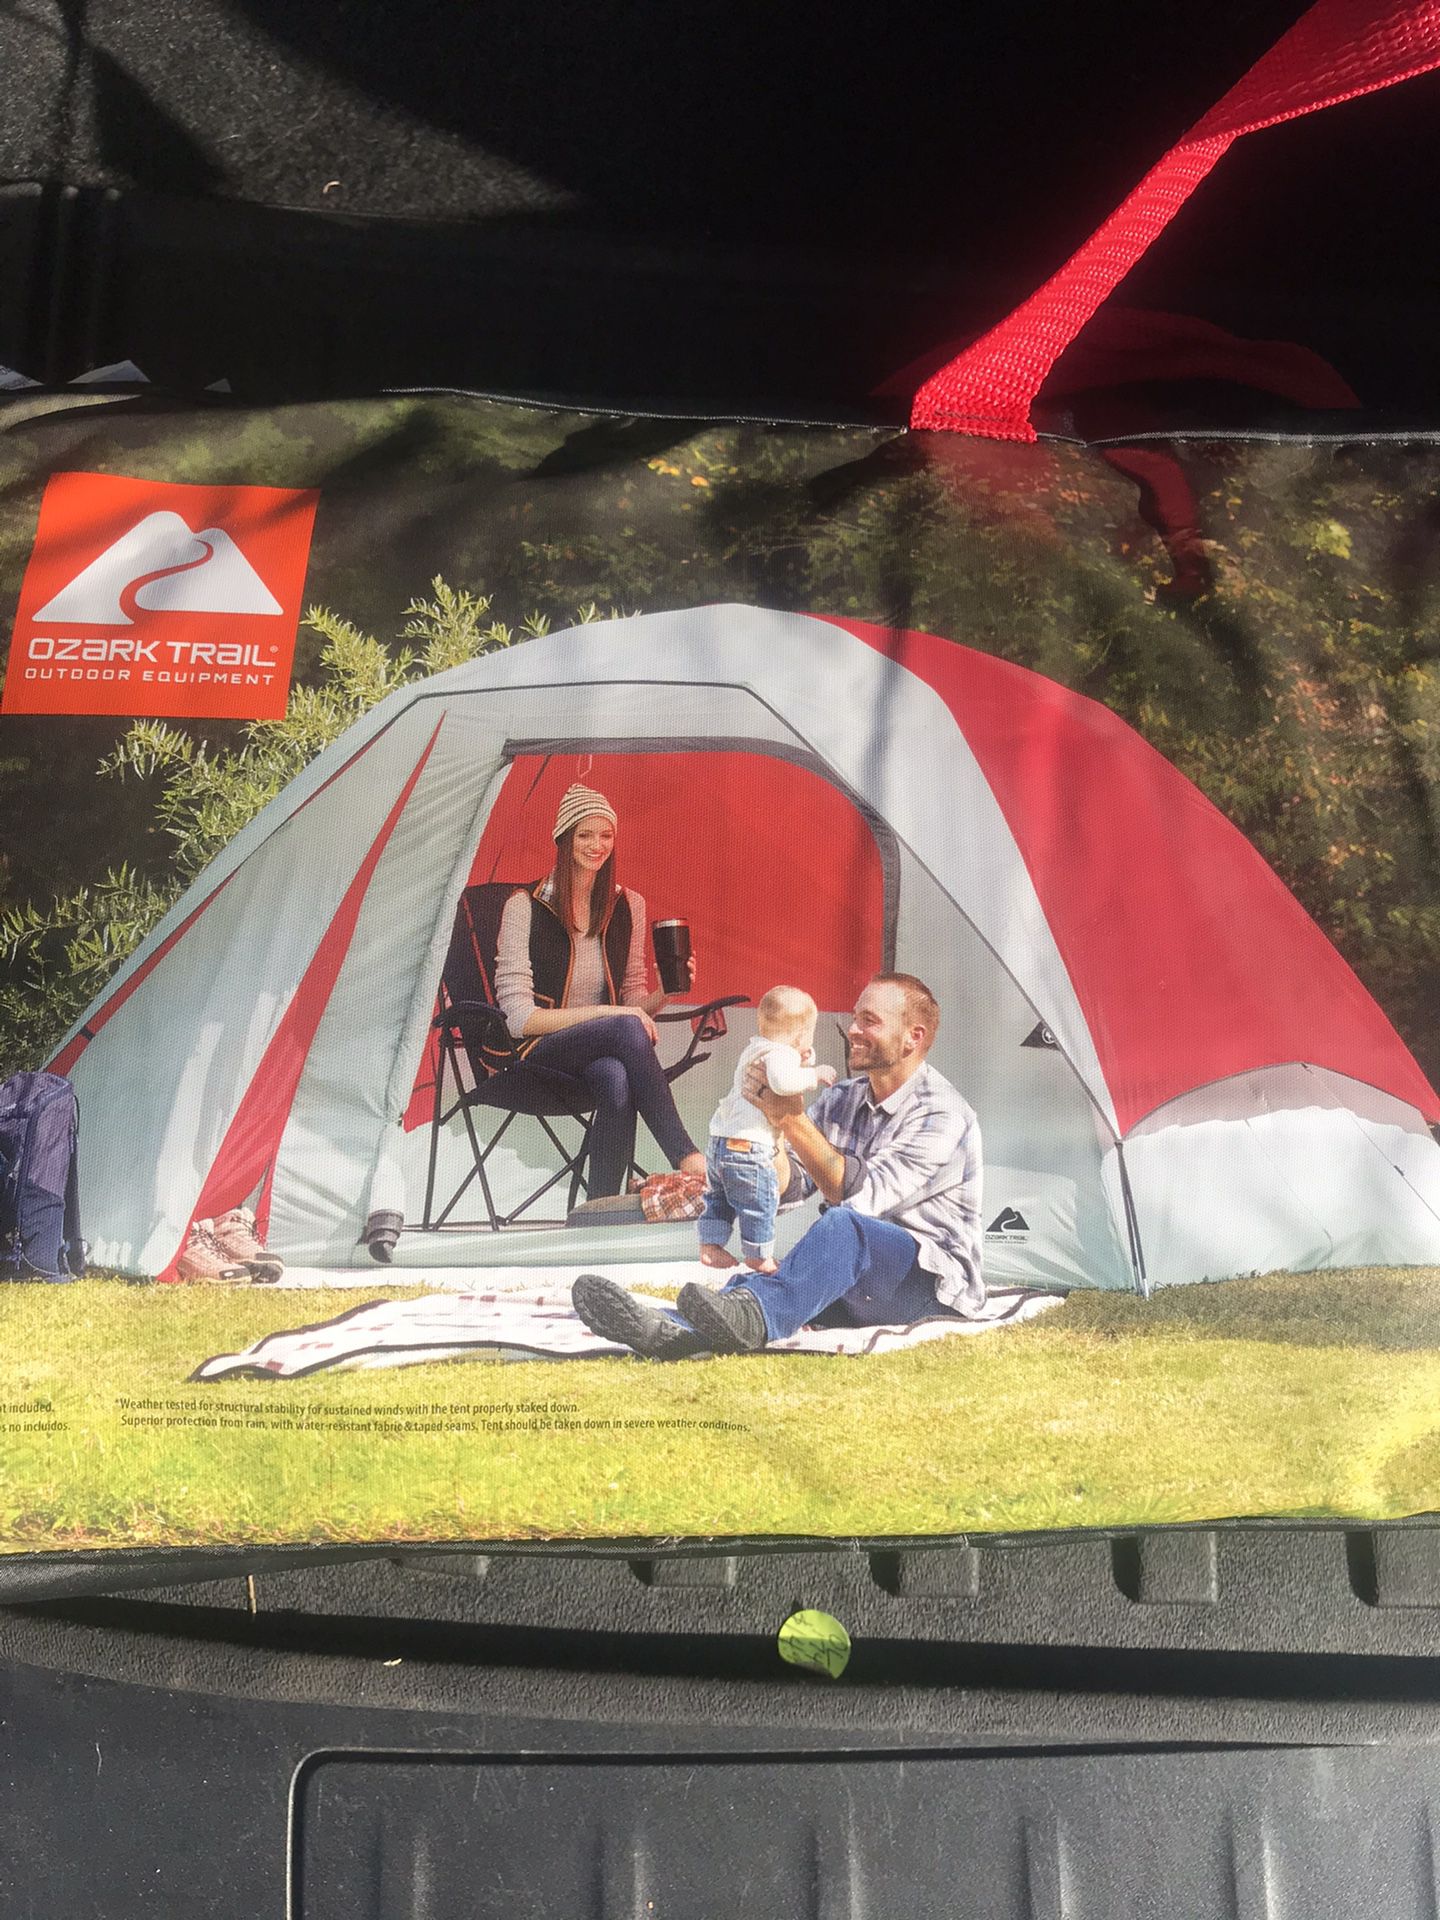 Ozark Trail 6 person camping dome tent